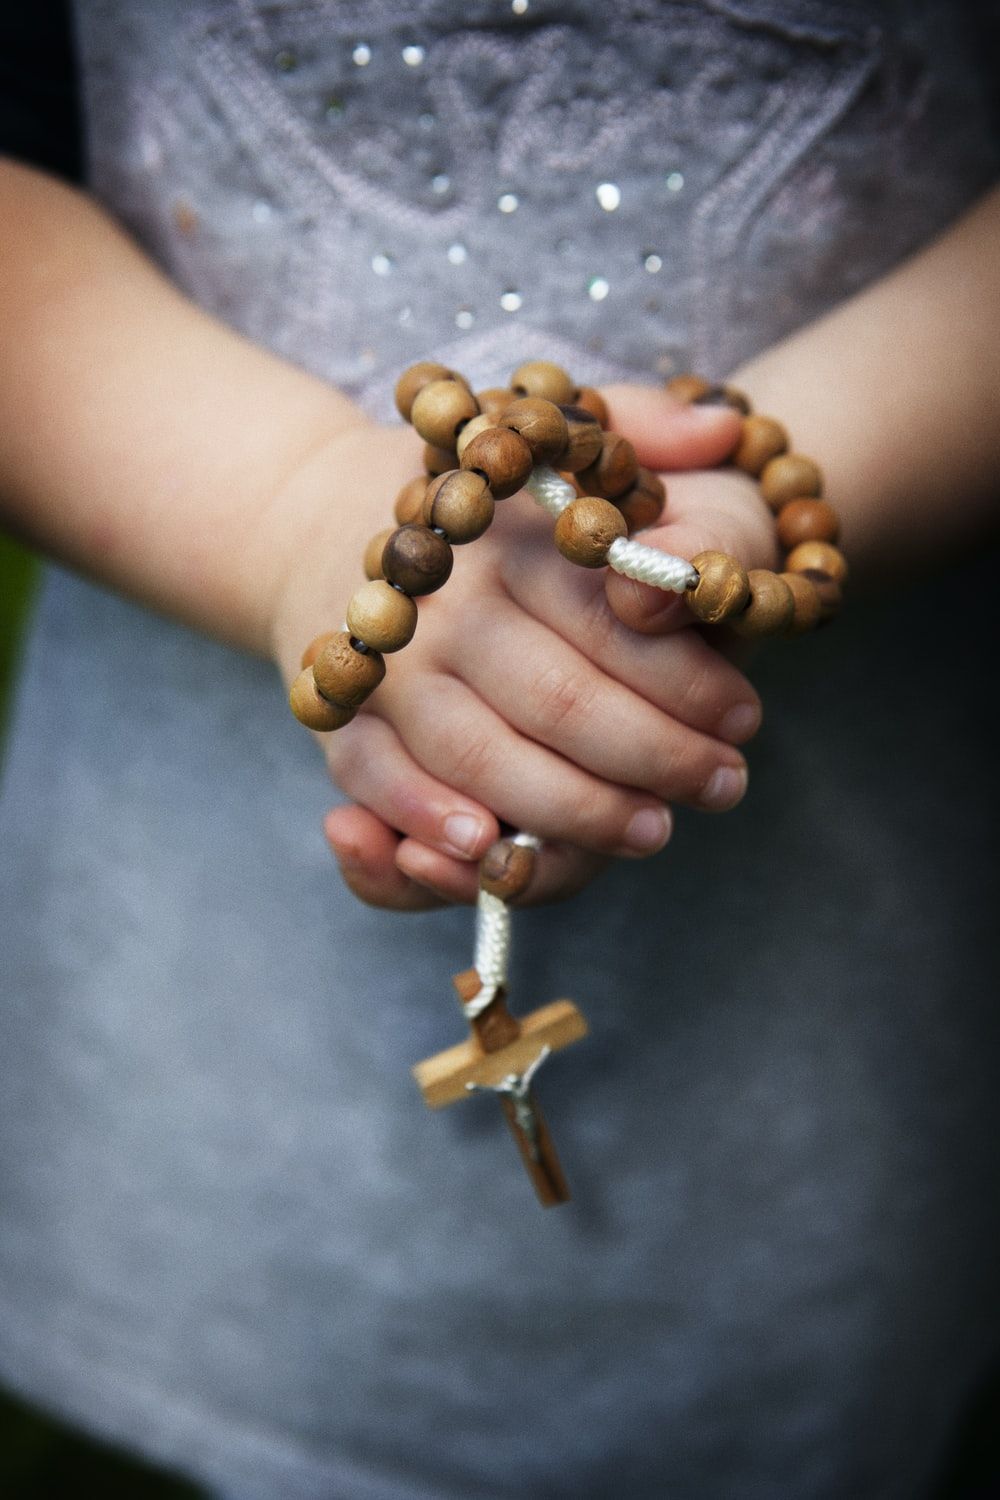 Praying Hand Picture. Download Free Image